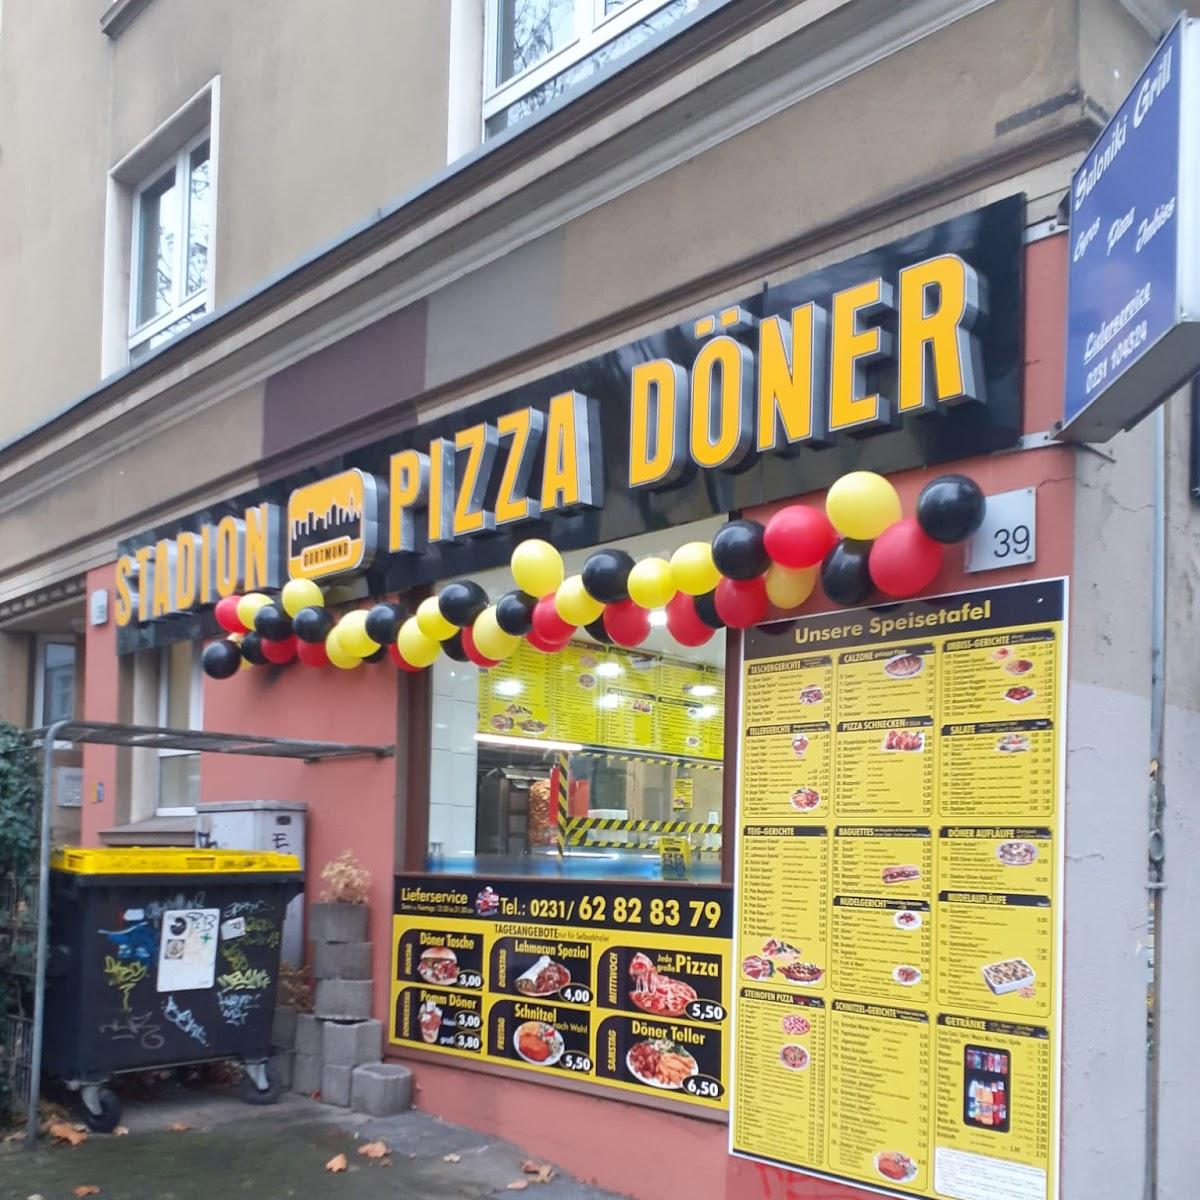 Restaurant "Stadion Pizza Döner" in Dortmund